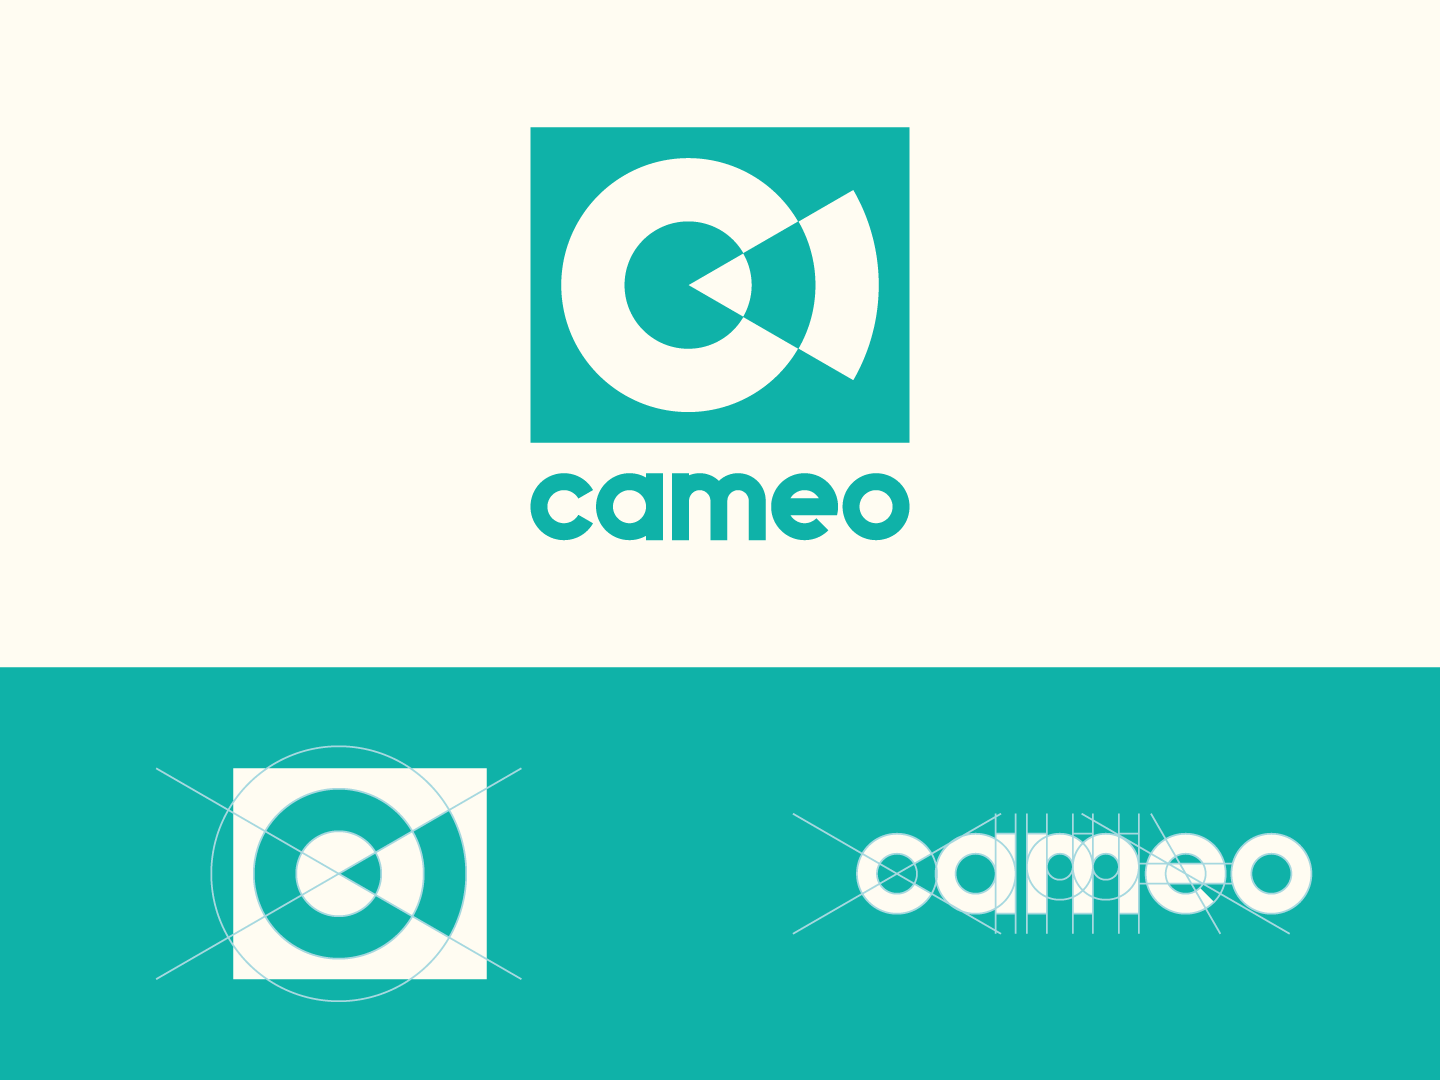 Cameo Logo - Cameo Logo by Joseph Lavington on Dribbble